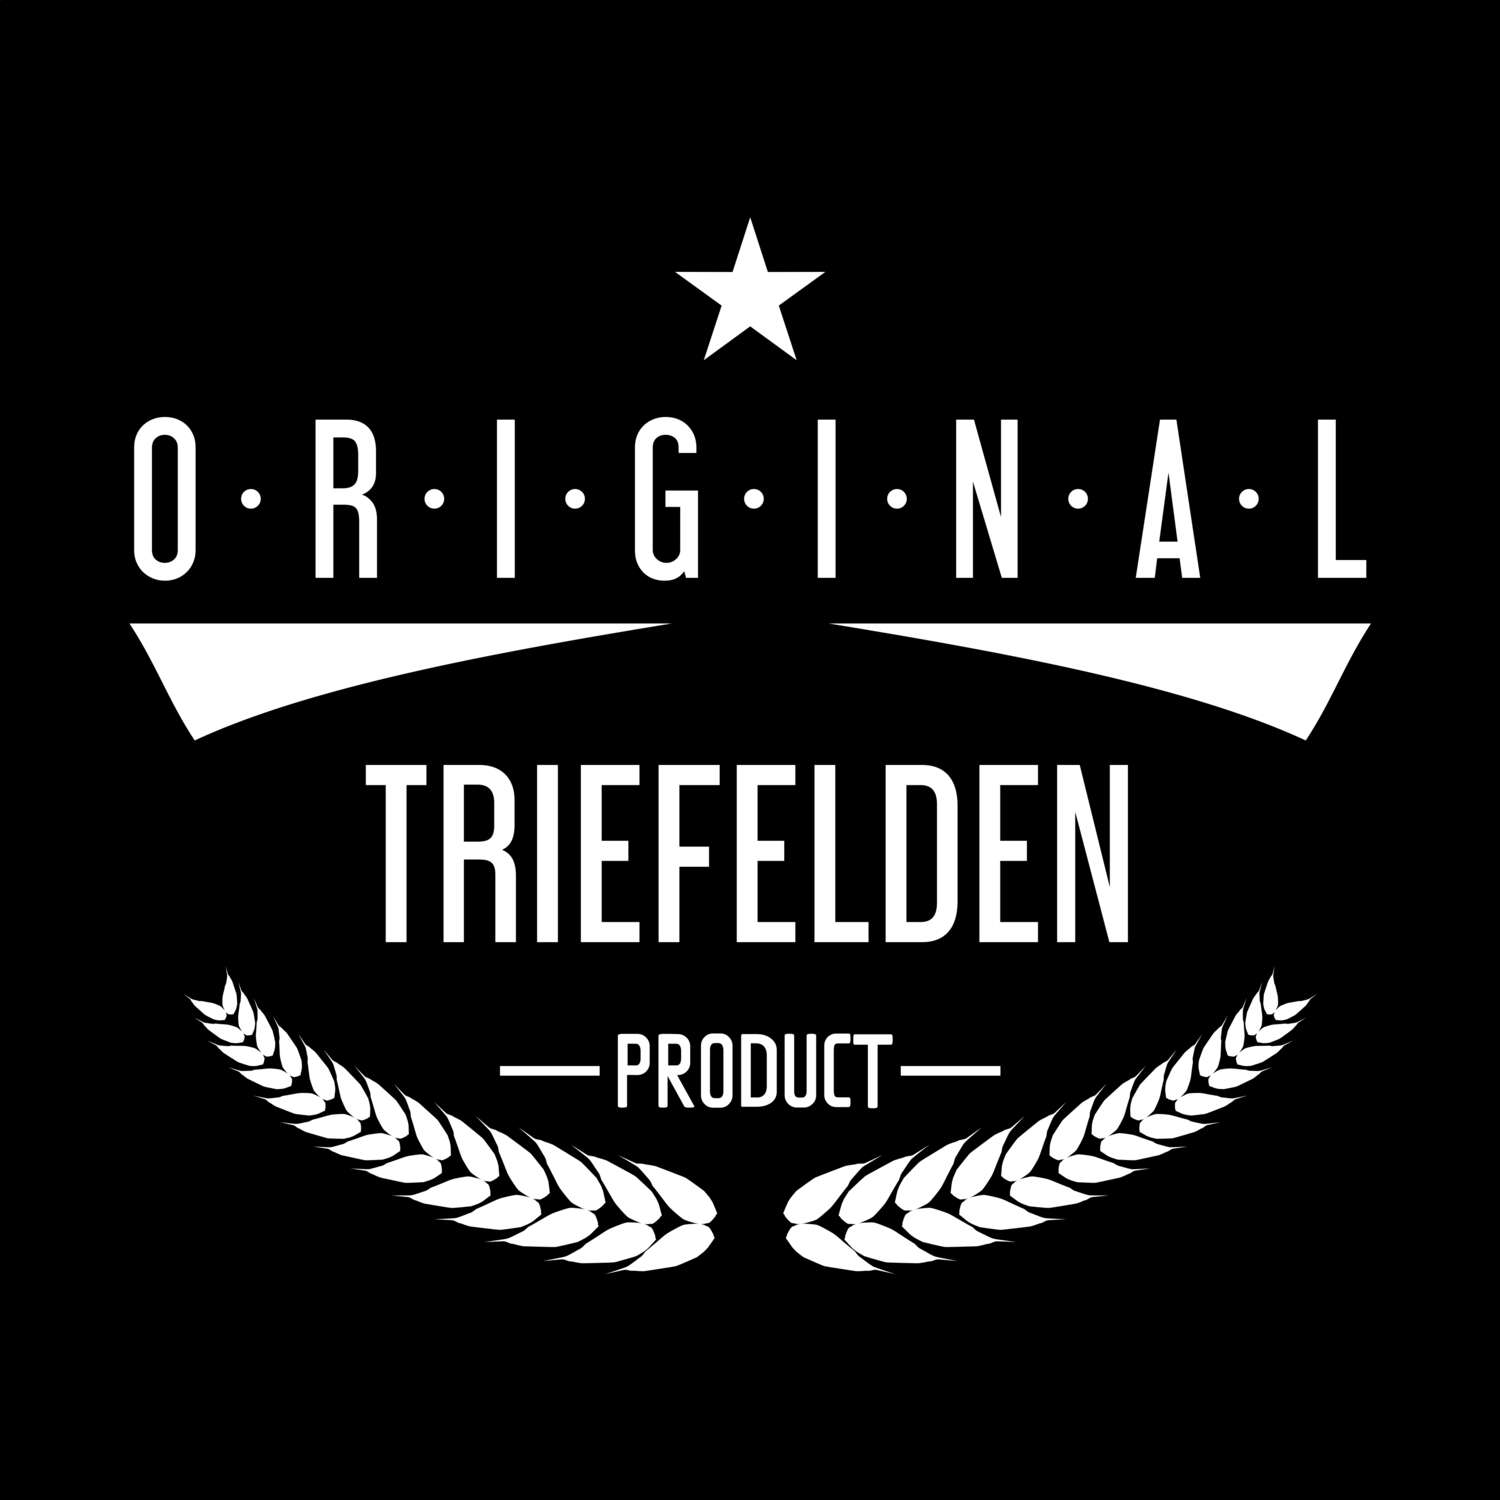 Triefelden T-Shirt »Original Product«